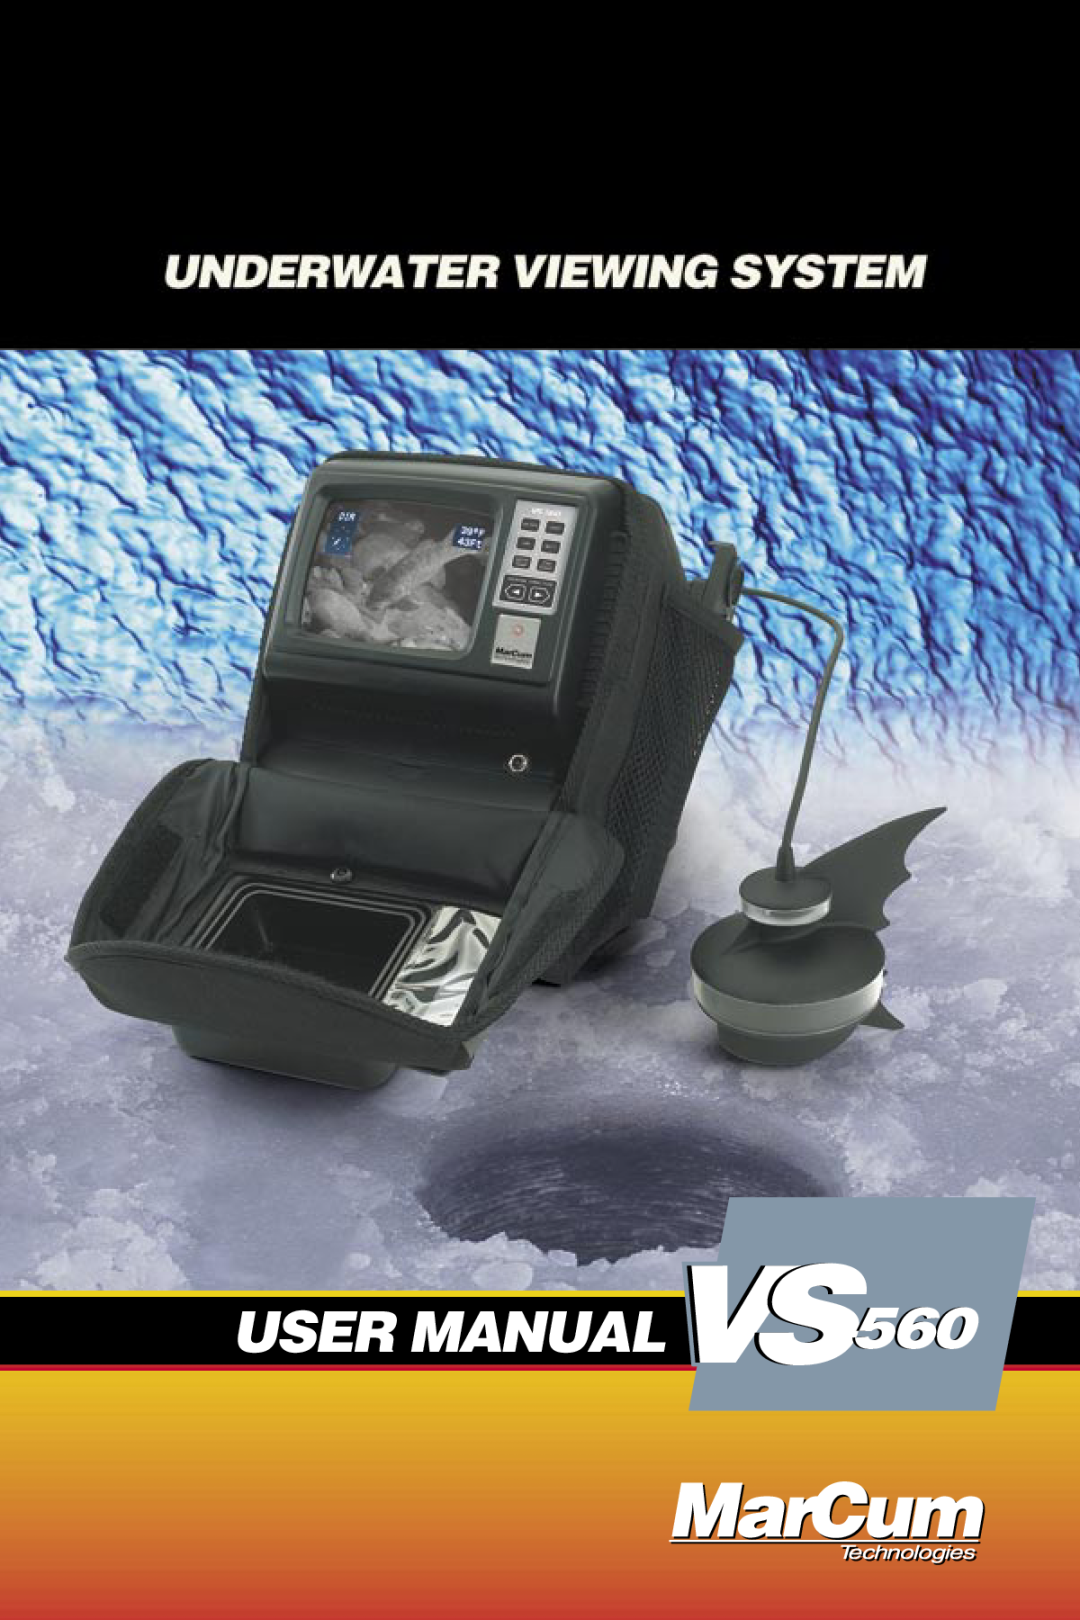 Marcum Technologies VS560 manual User Manual 